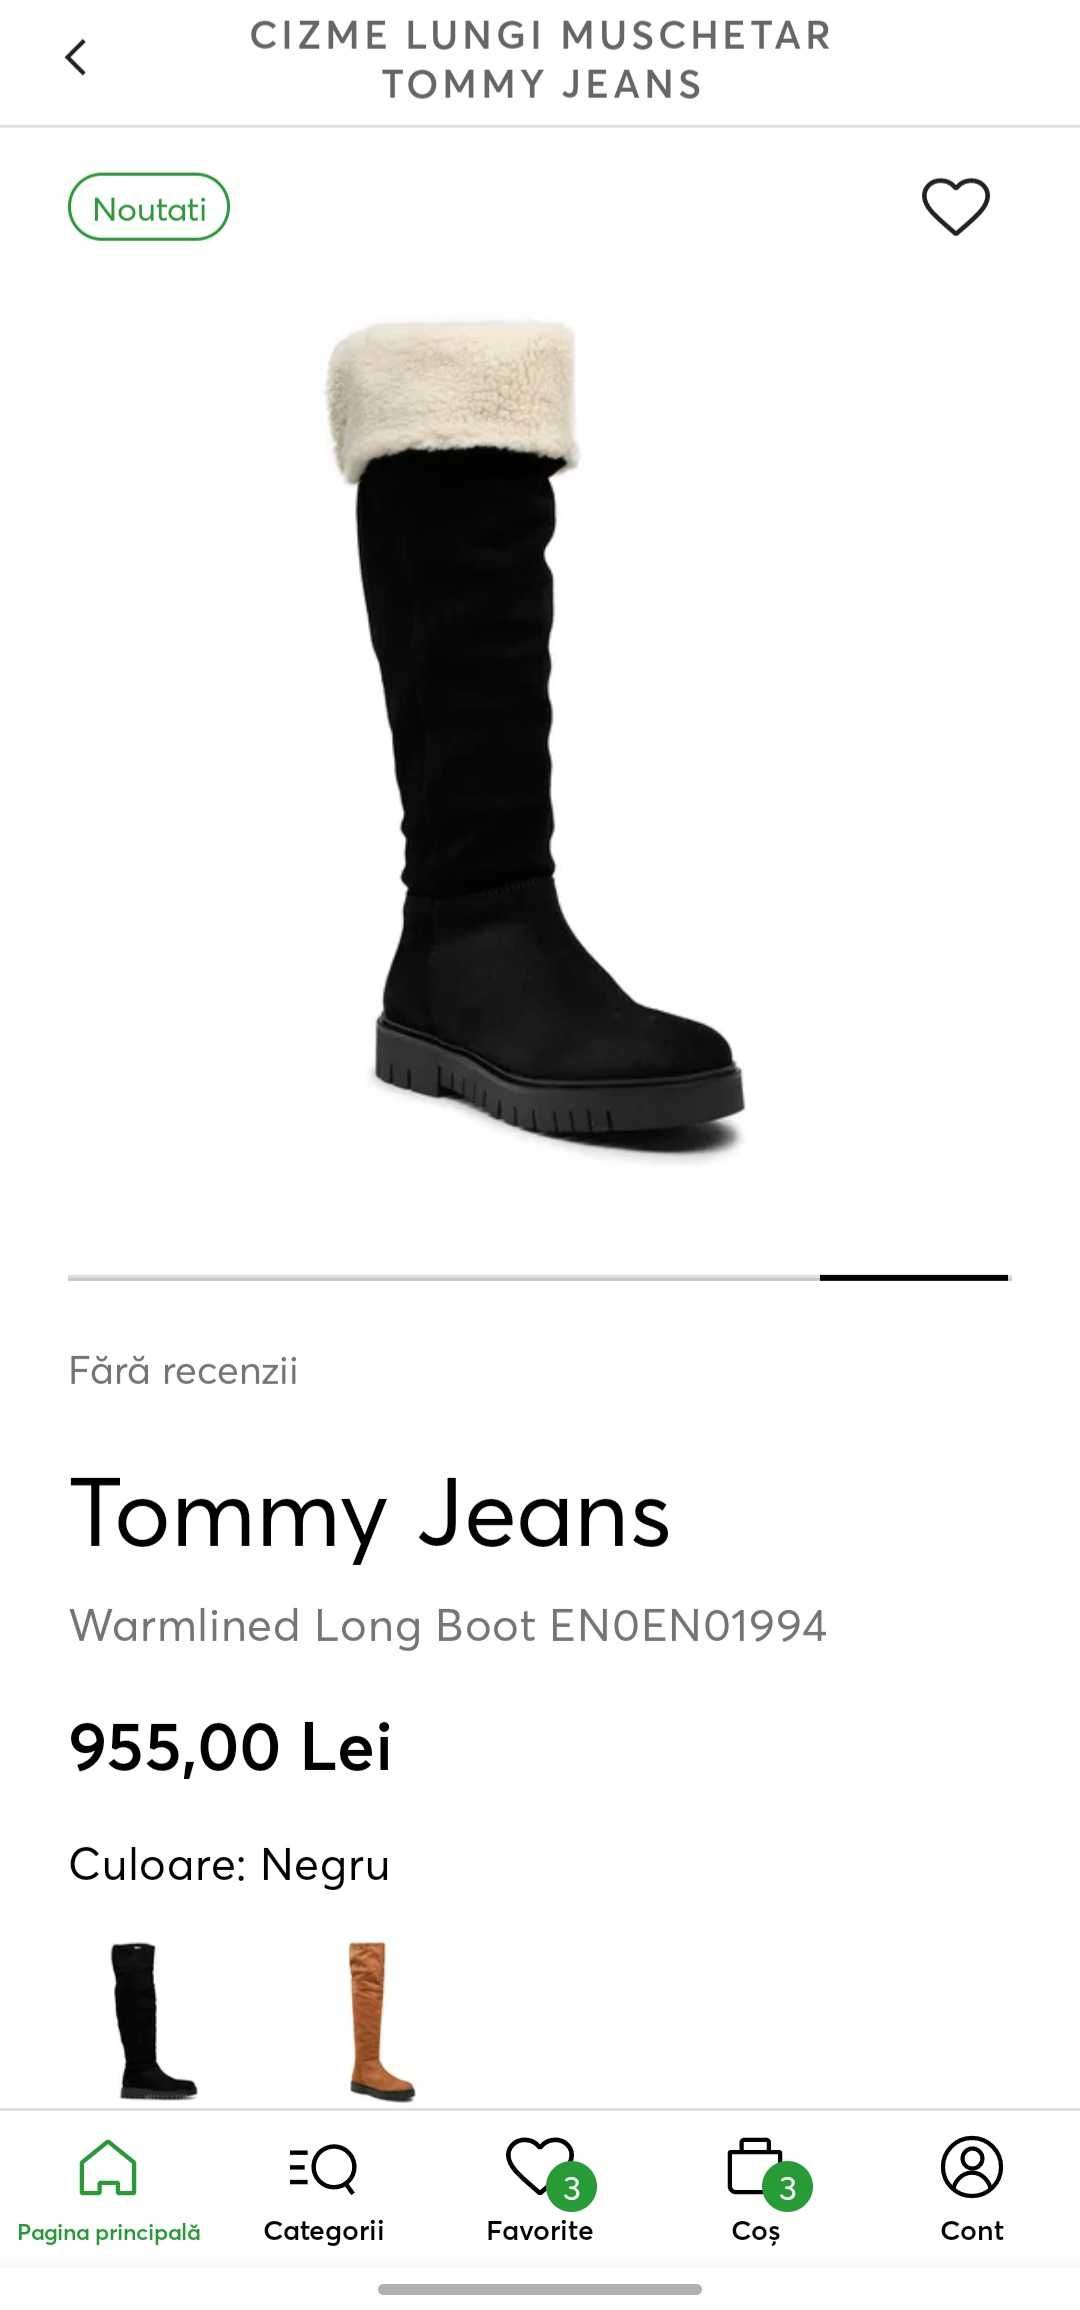 Cizme Lungi Muschetar Tommy Jeans